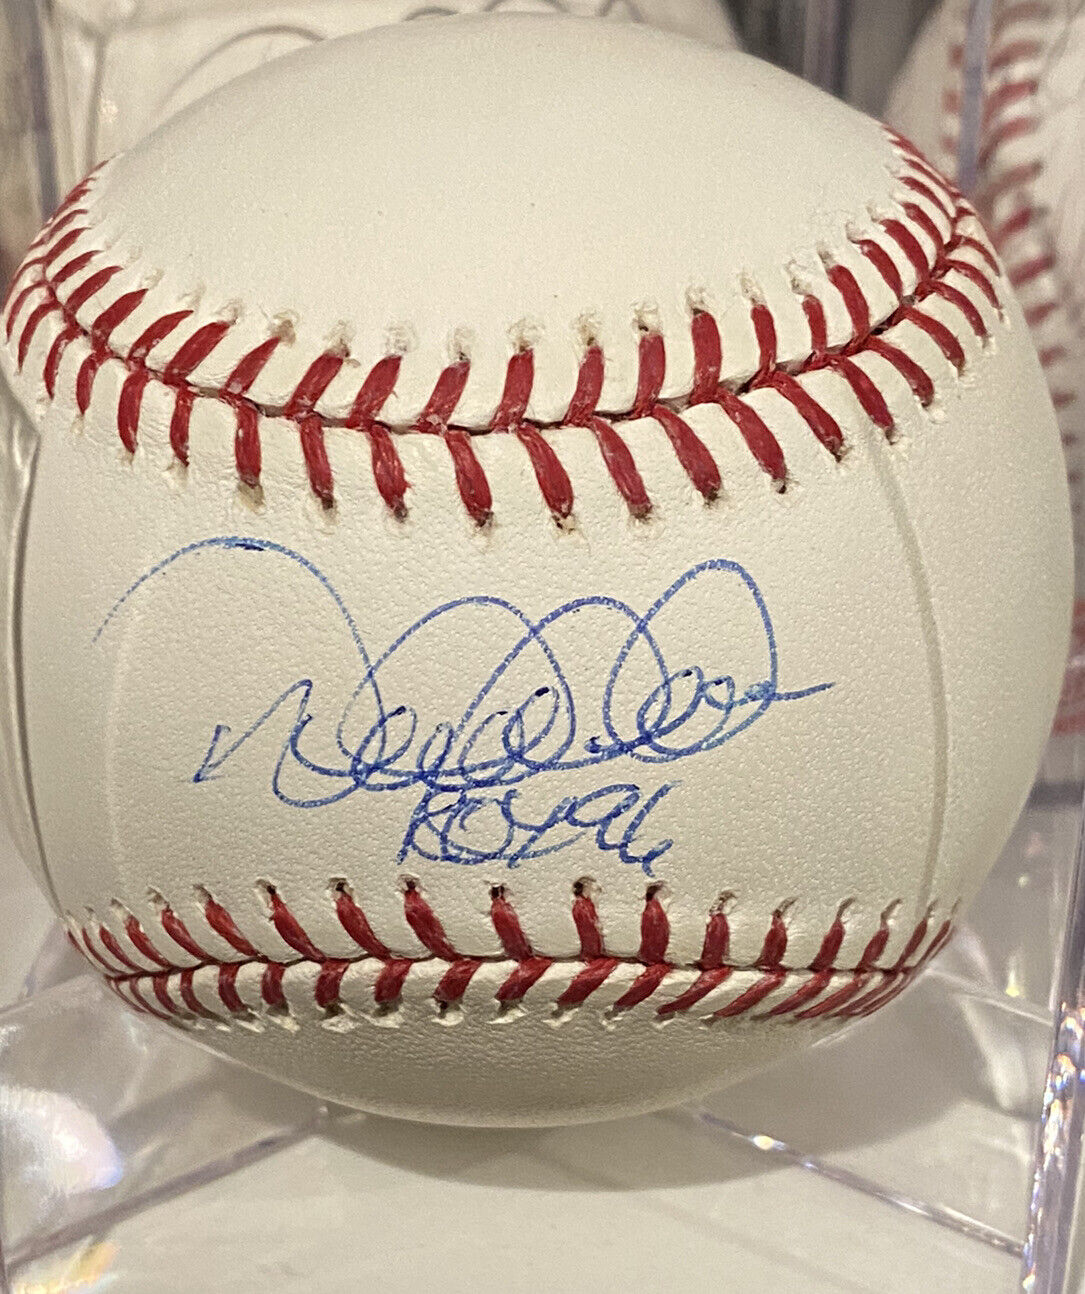 Derek Jeter Autographed Baseball Inscription ROY 96.